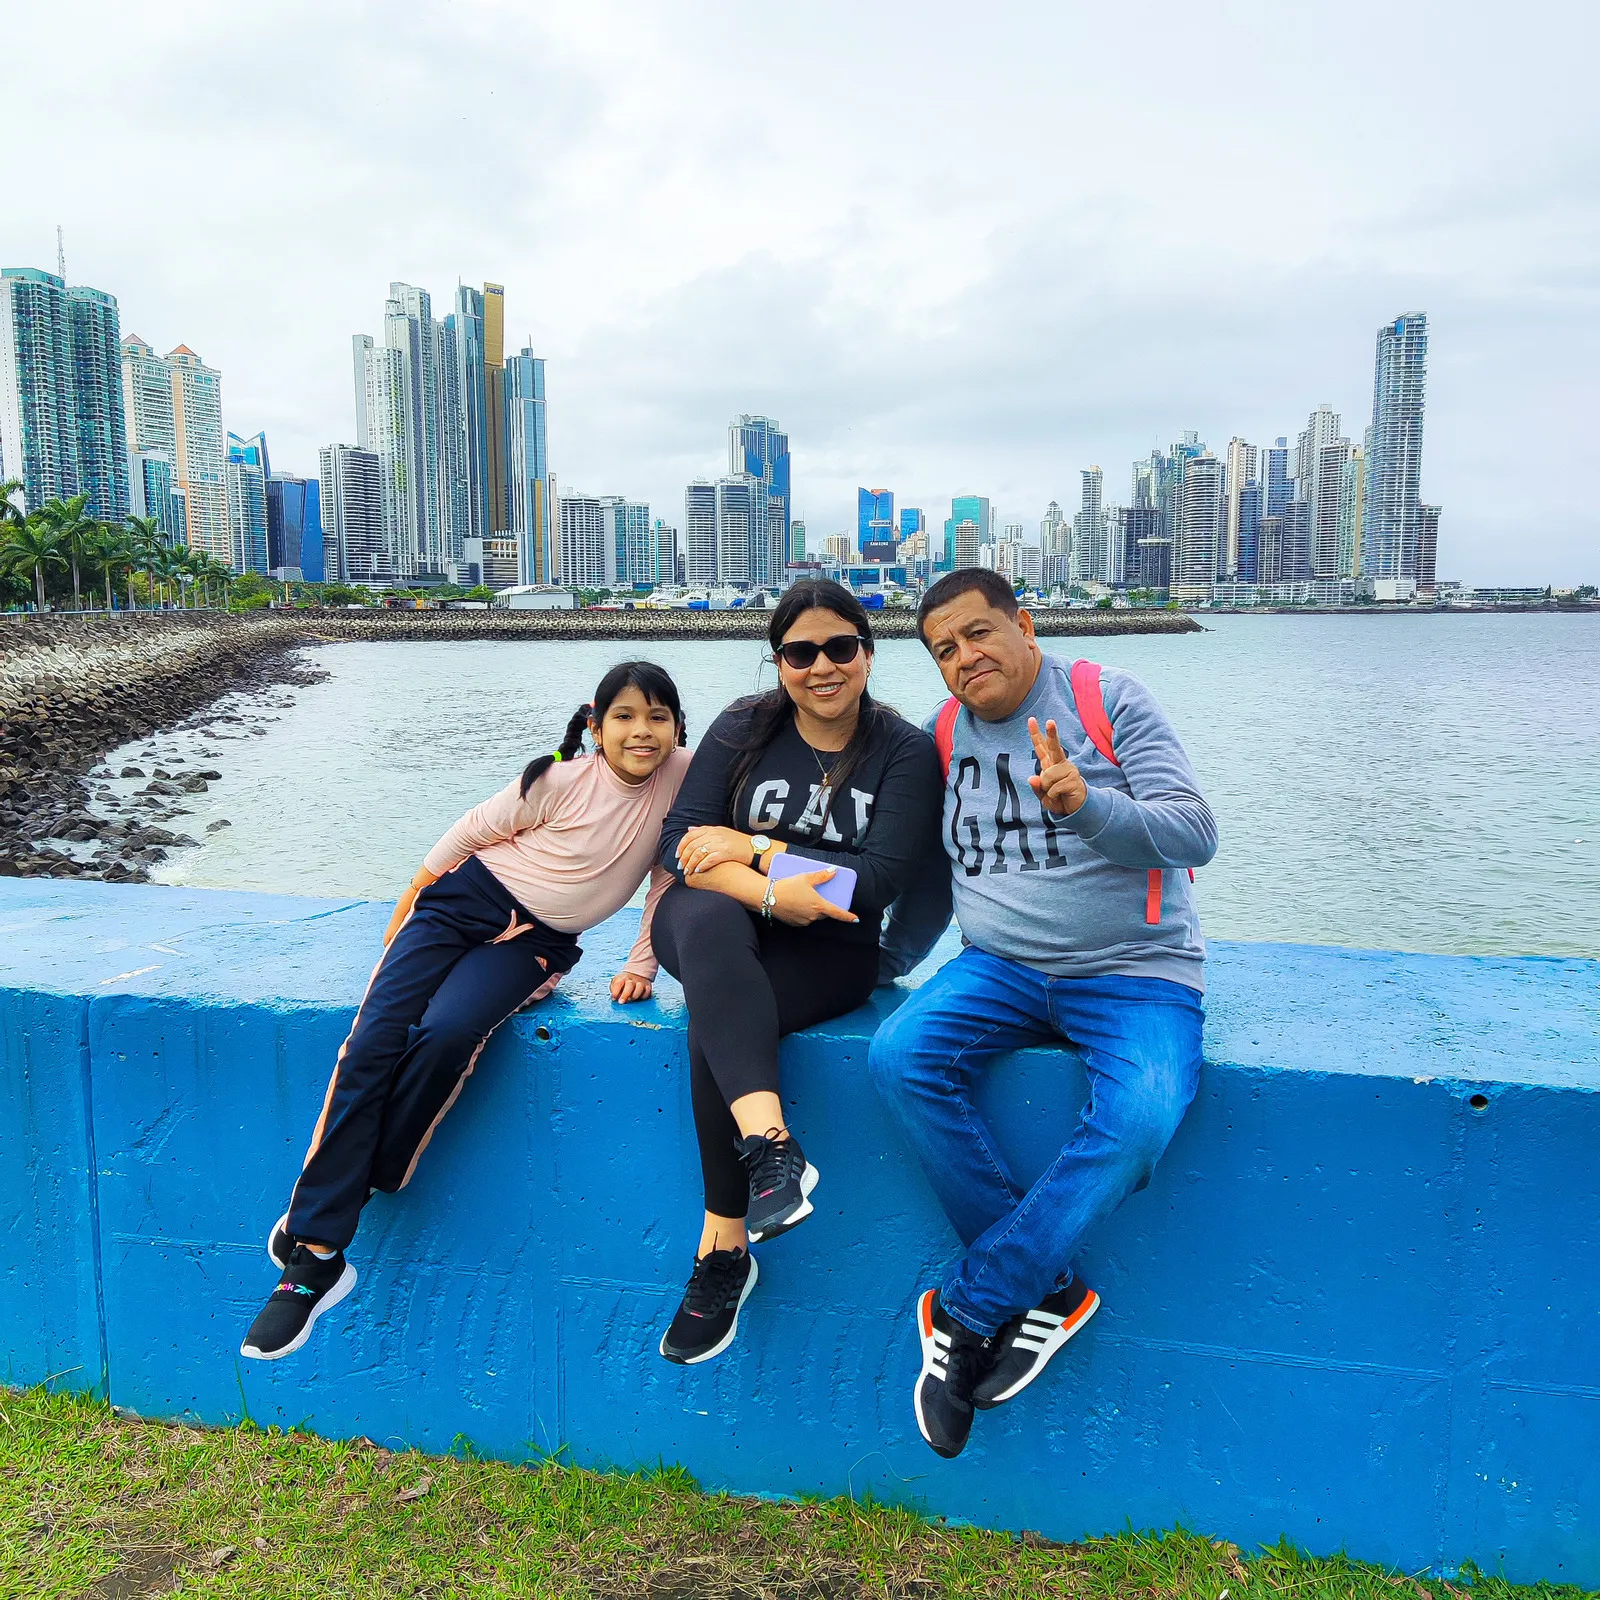 Tour en Panamá con Johanna, Maria y Manuel de Perú - Panamá tour Trip 